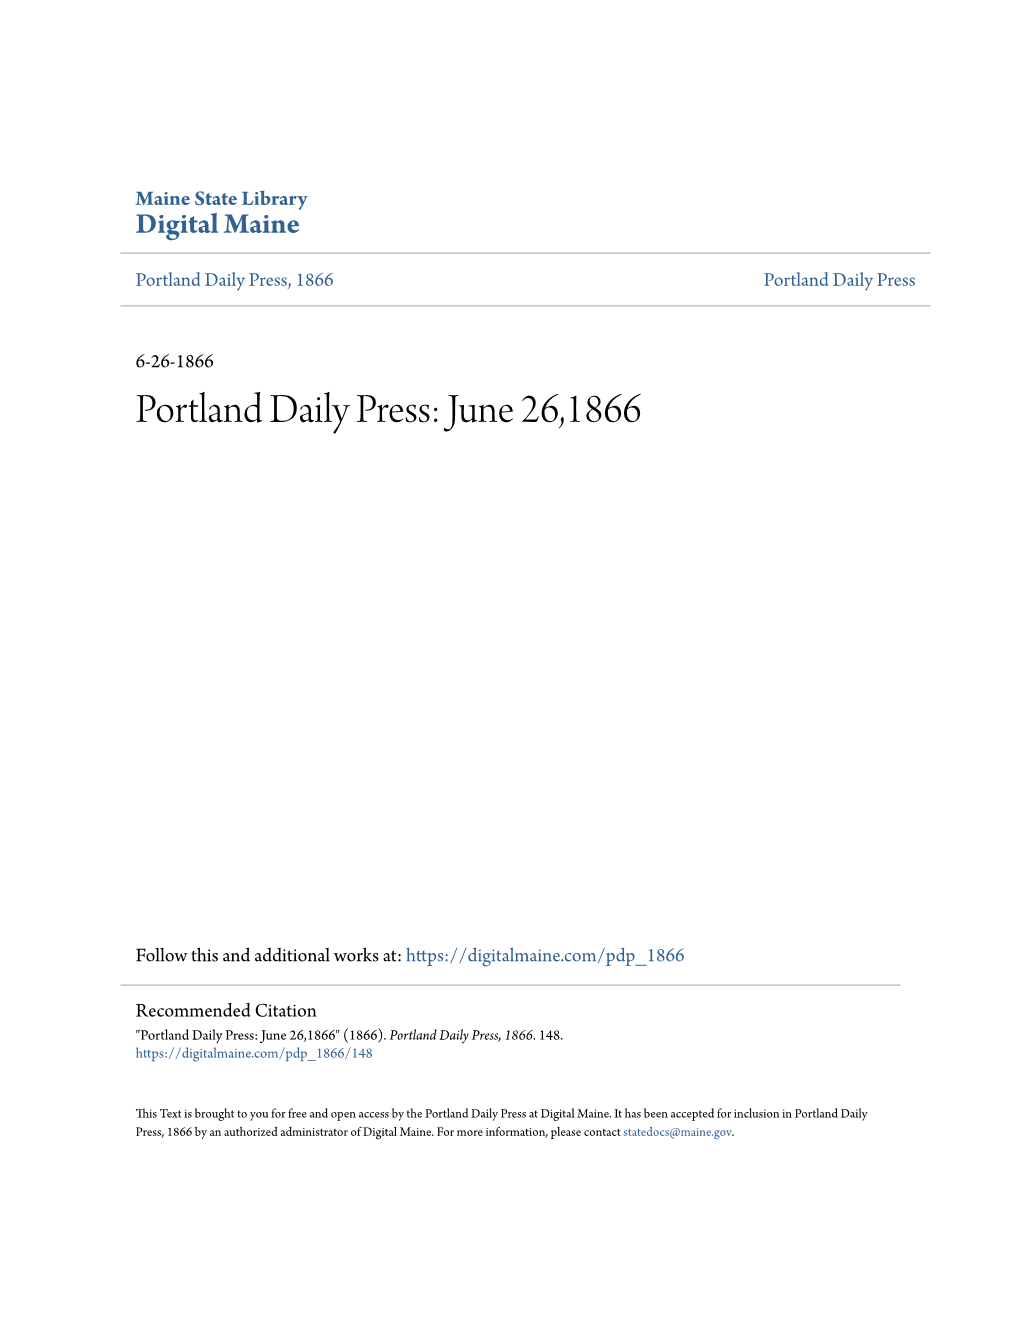 Portland Daily Press: June 26,1866